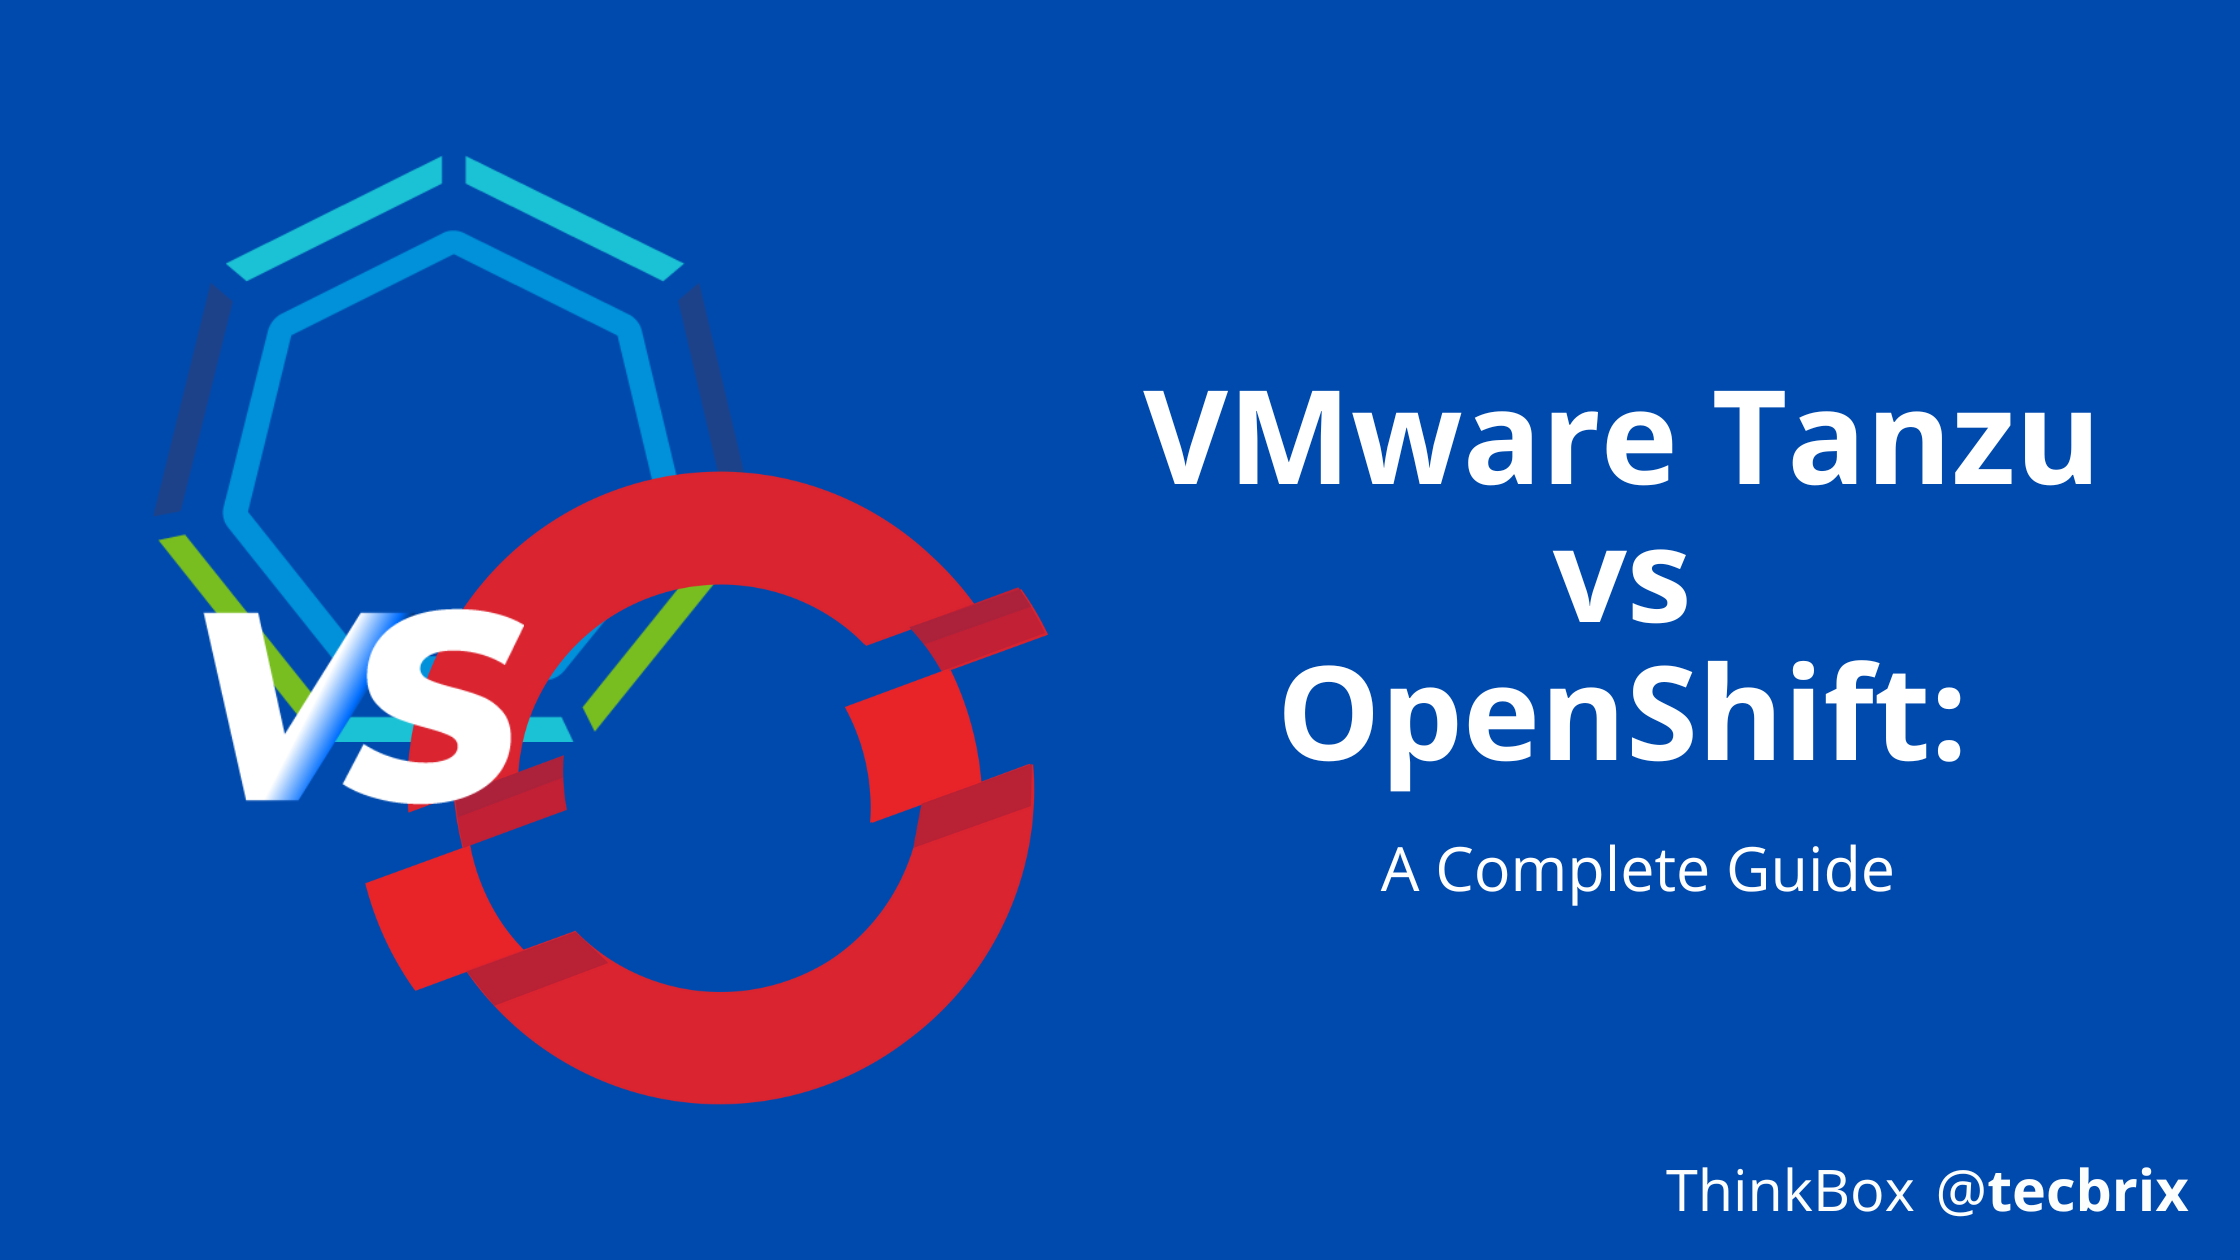 VMware Tanzu vs OpenShift